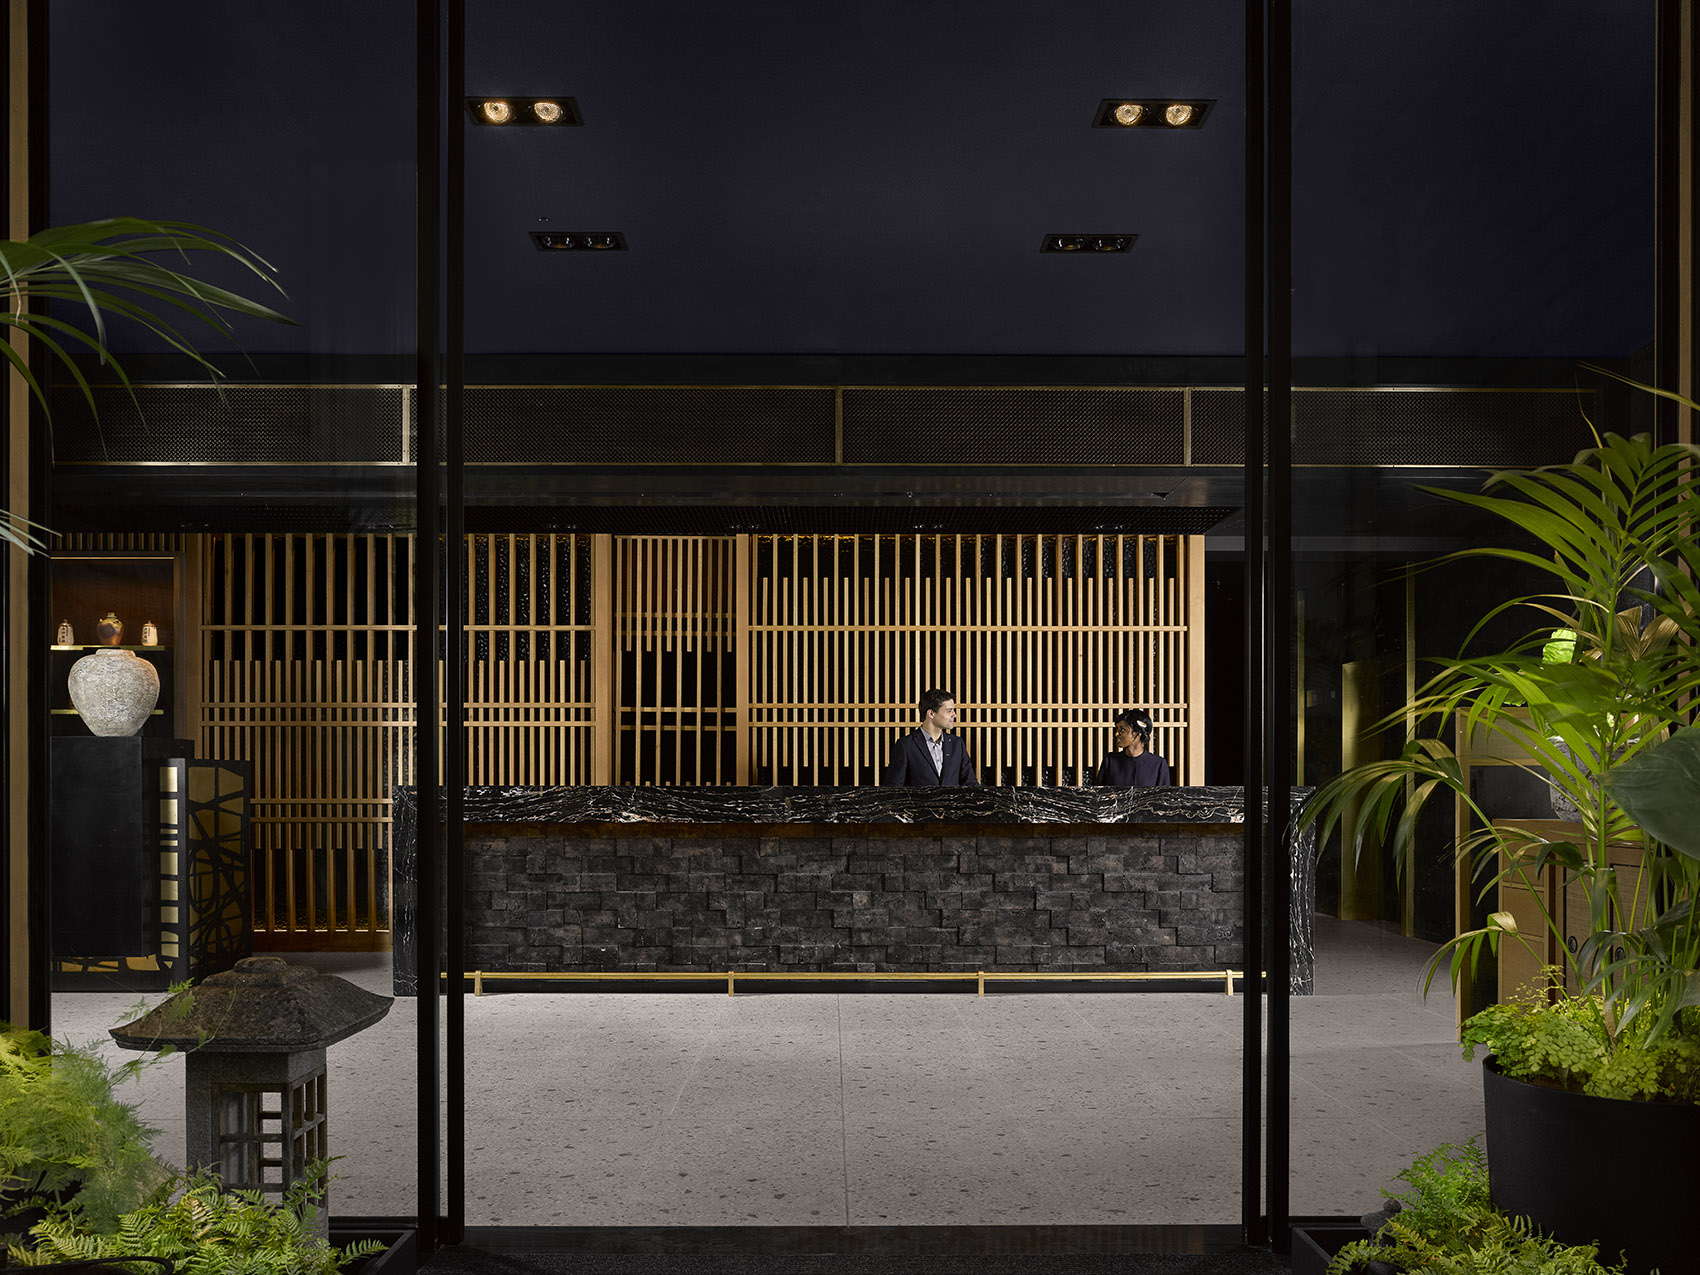 002-Nobu-Hotel-by-Ben-Adams-Architects.jpg